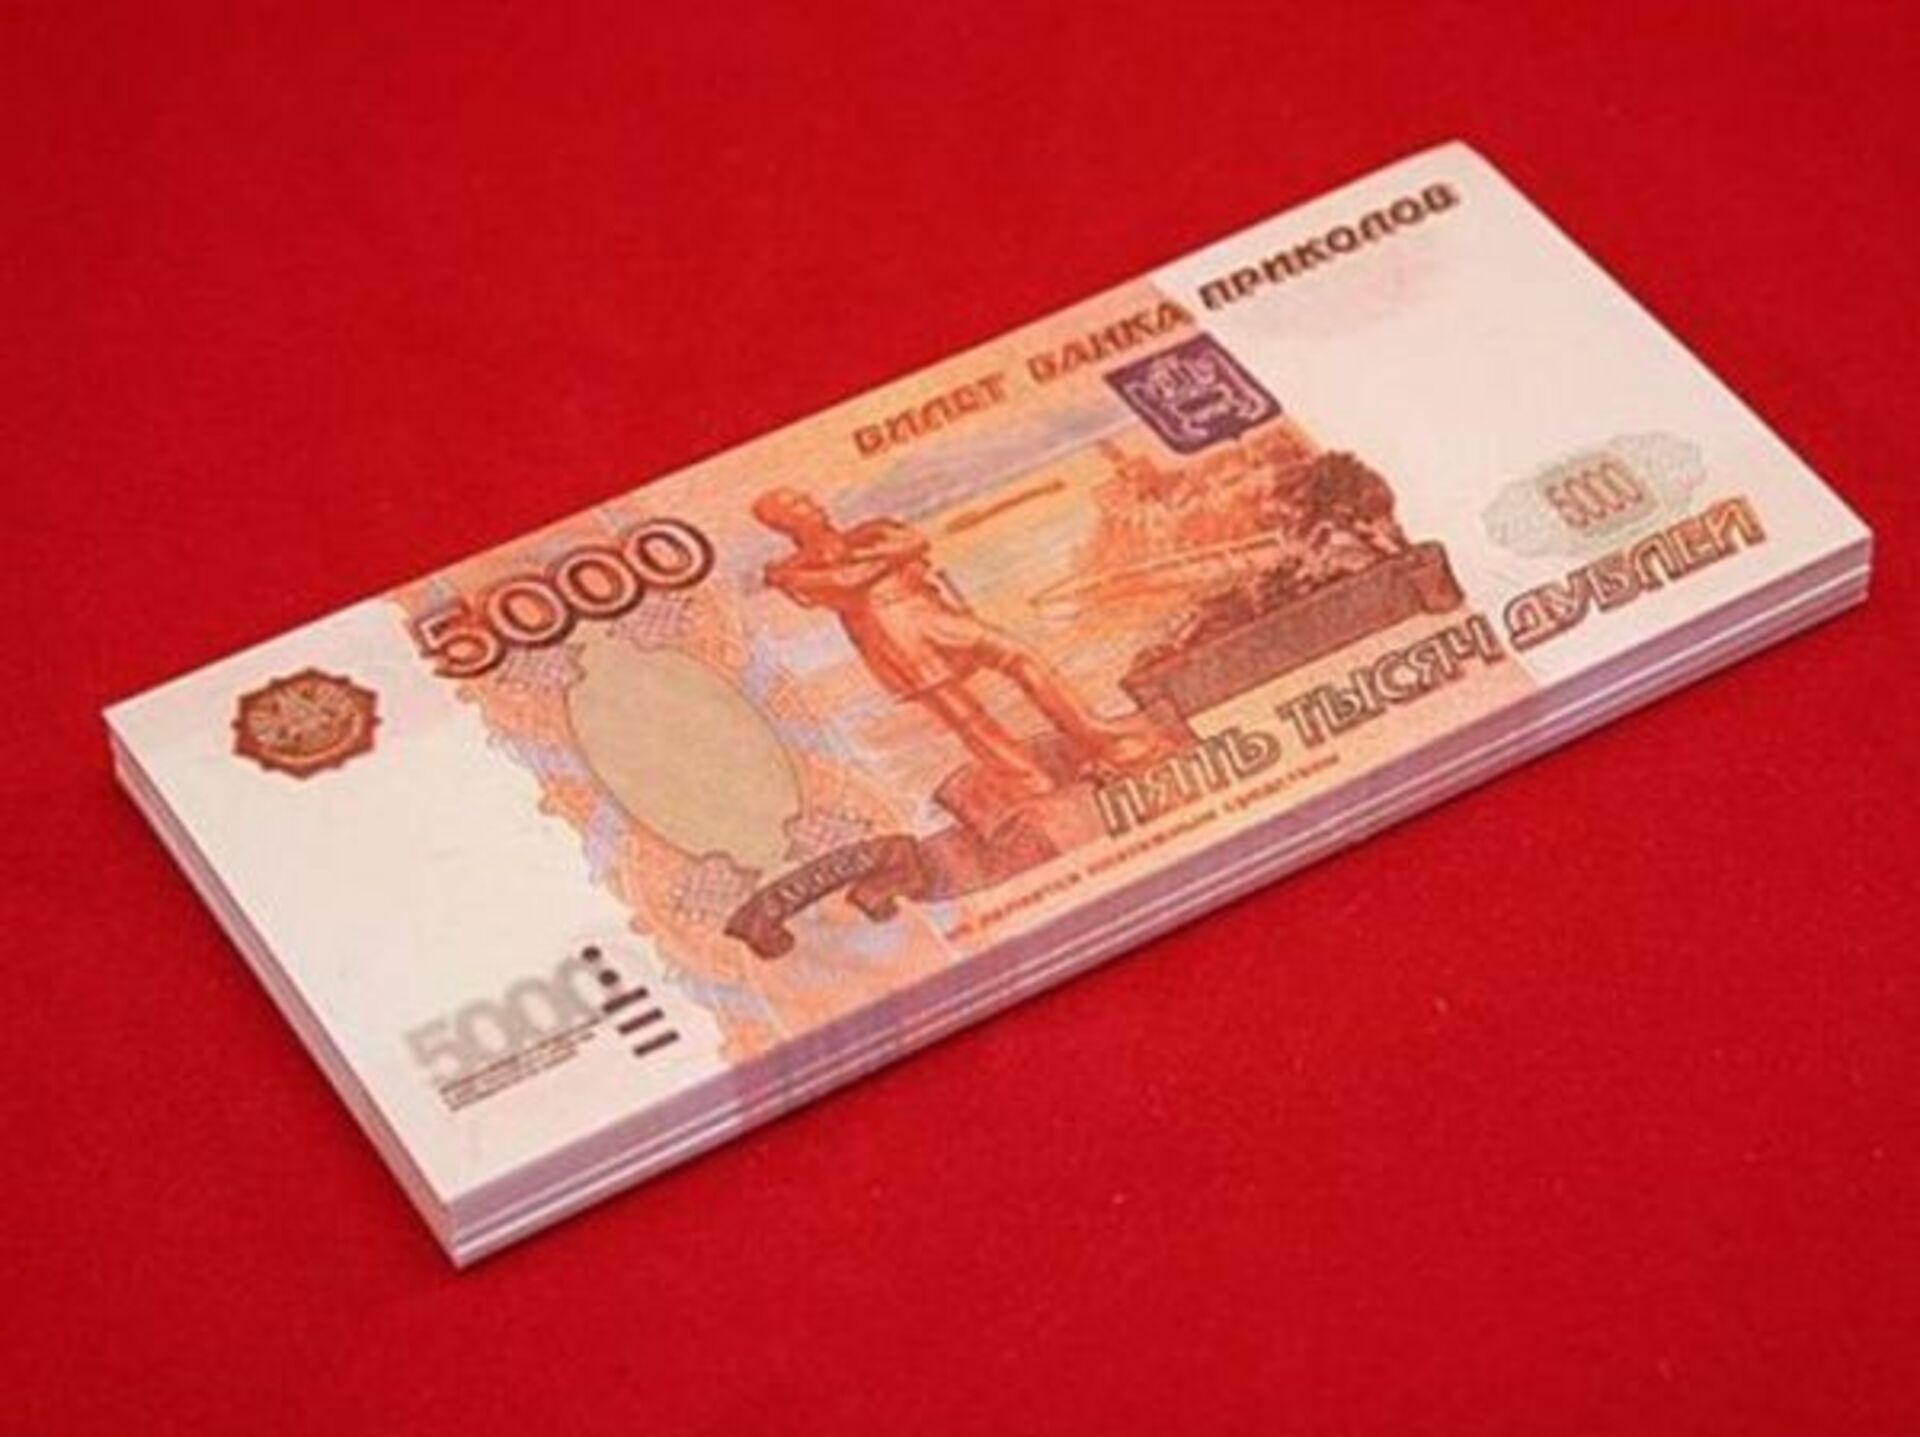 5 от 14 000 рублей